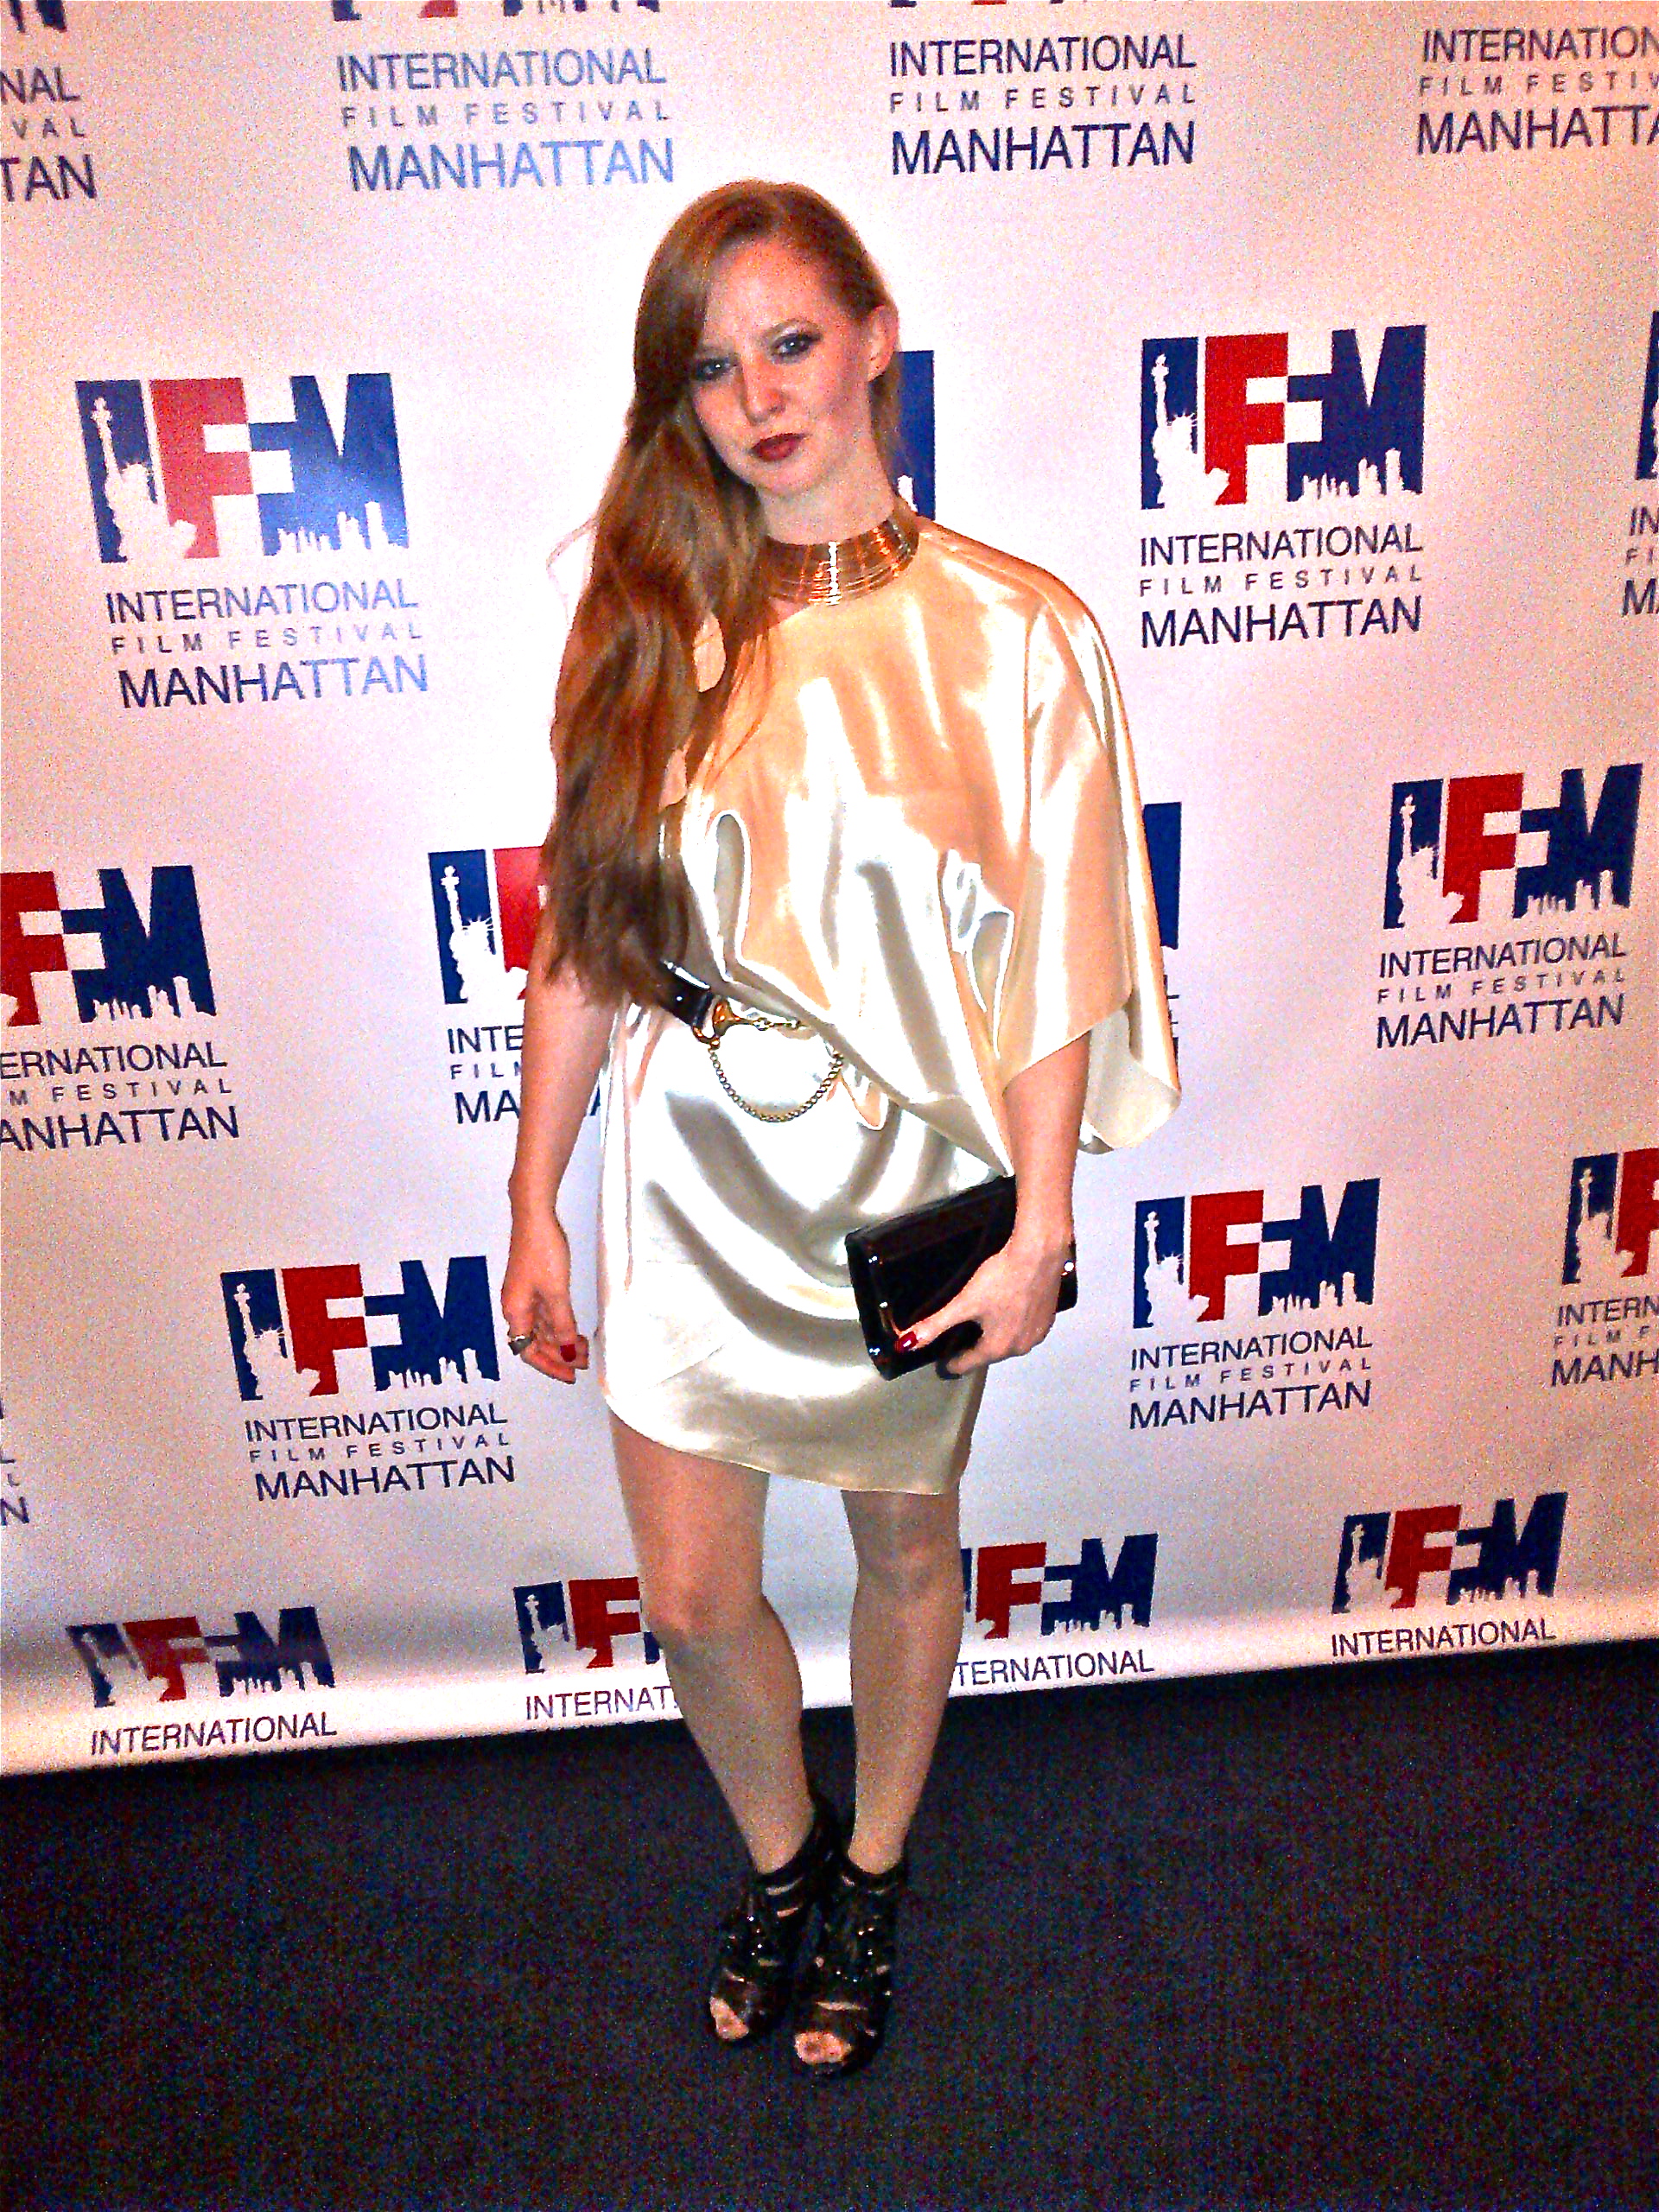 International Film Festival Manhattan NYC 2013